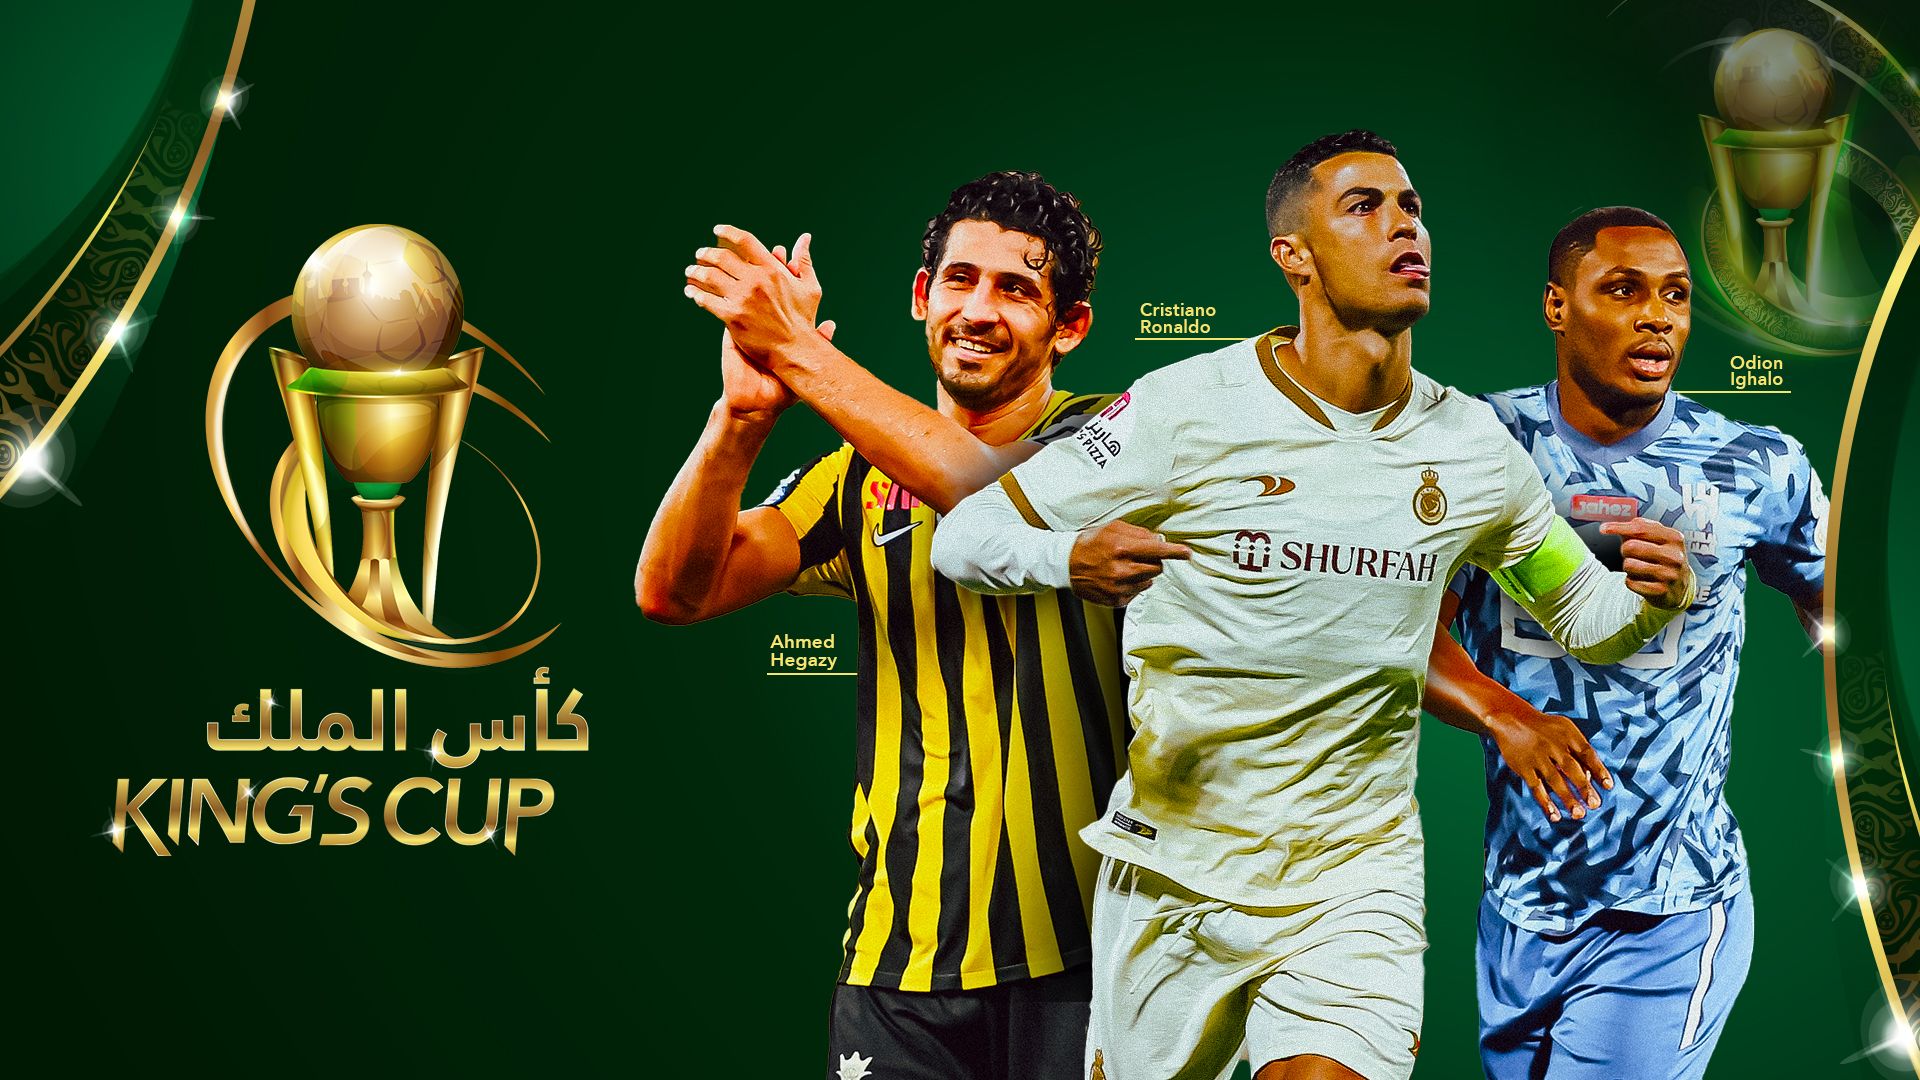 Saudi King's Cup 2022-23